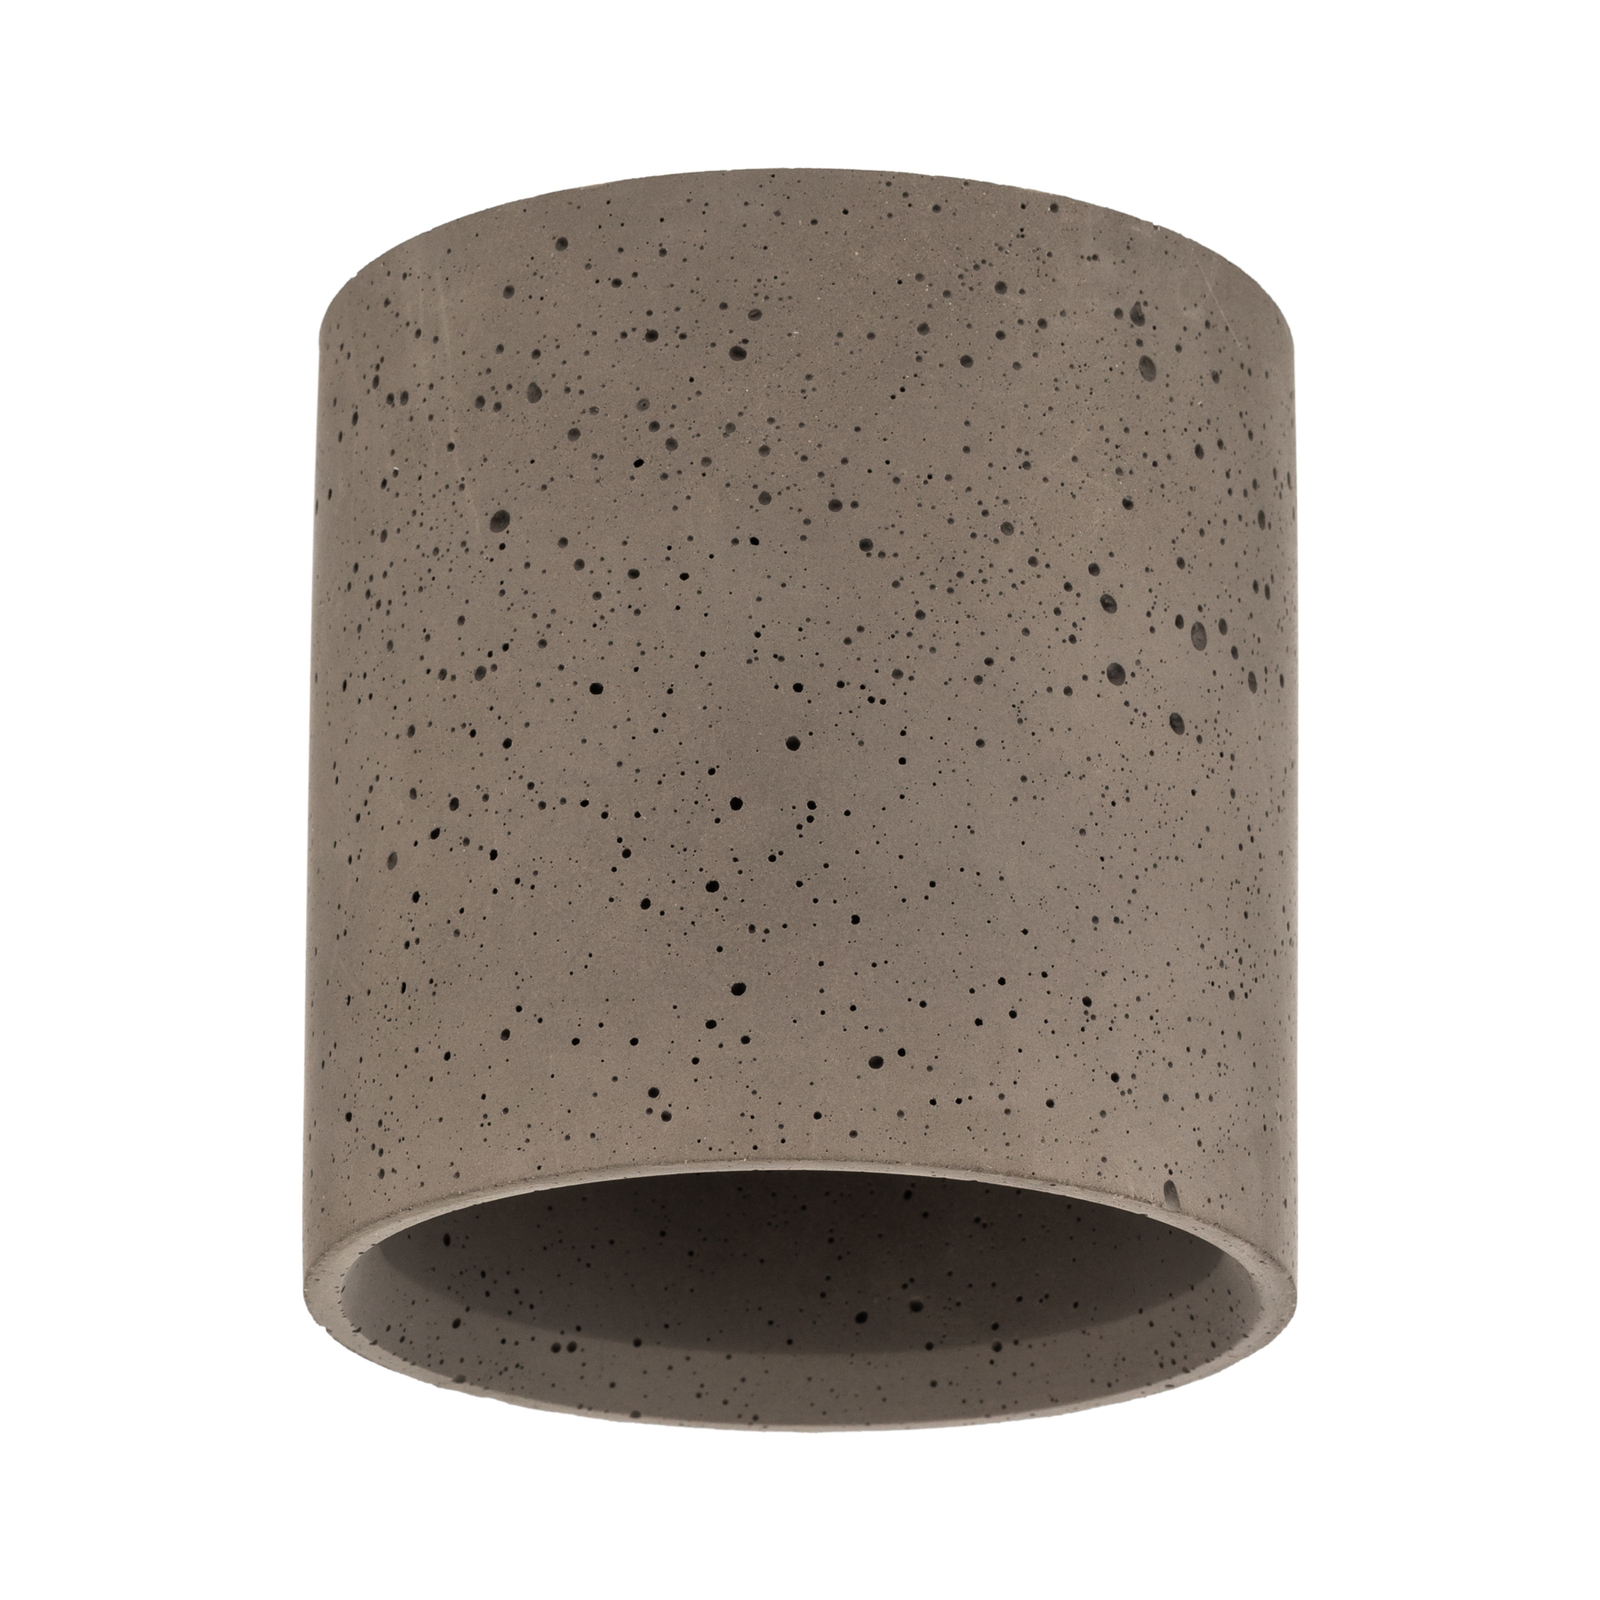 Downlight Shy M av betong, Ø 14,5 cm